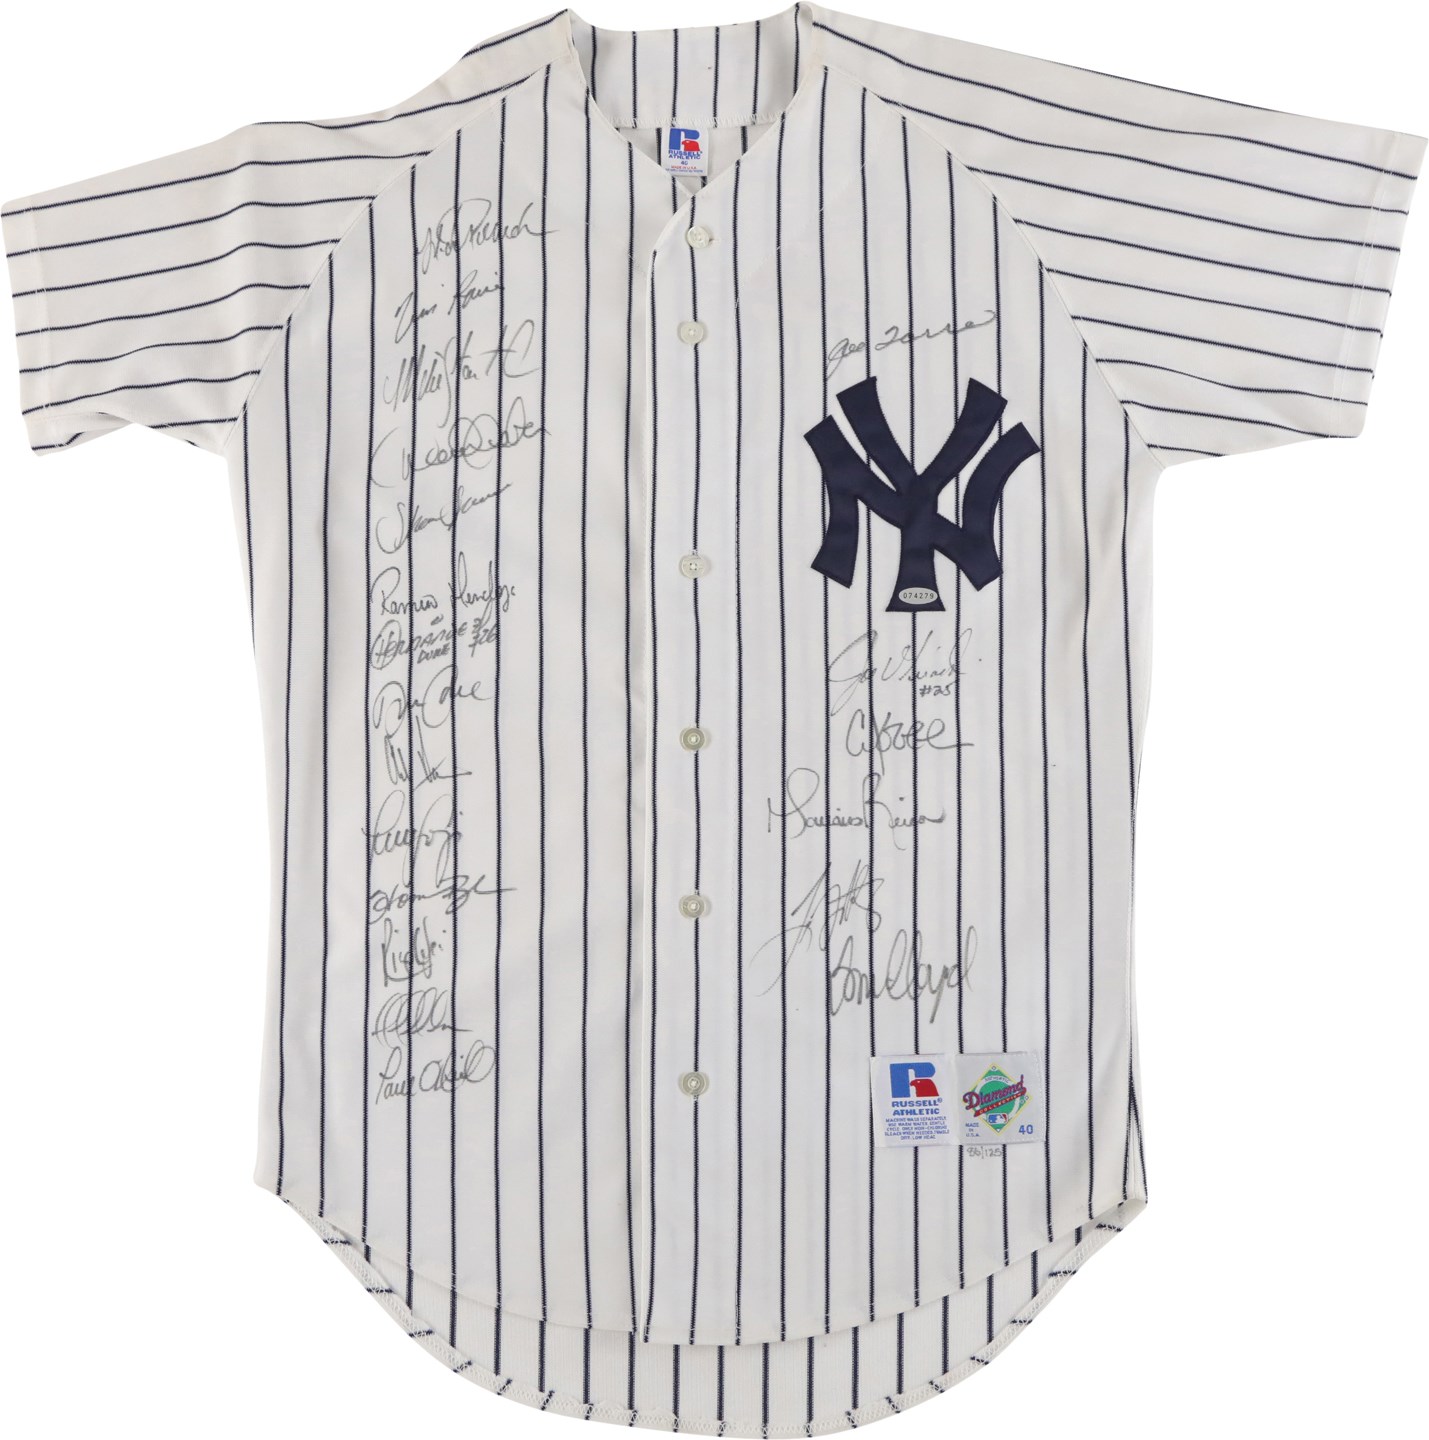 1998 World Champion New York Yankees Team Signed Jersey Limited Edition #86/125 (Steiner)